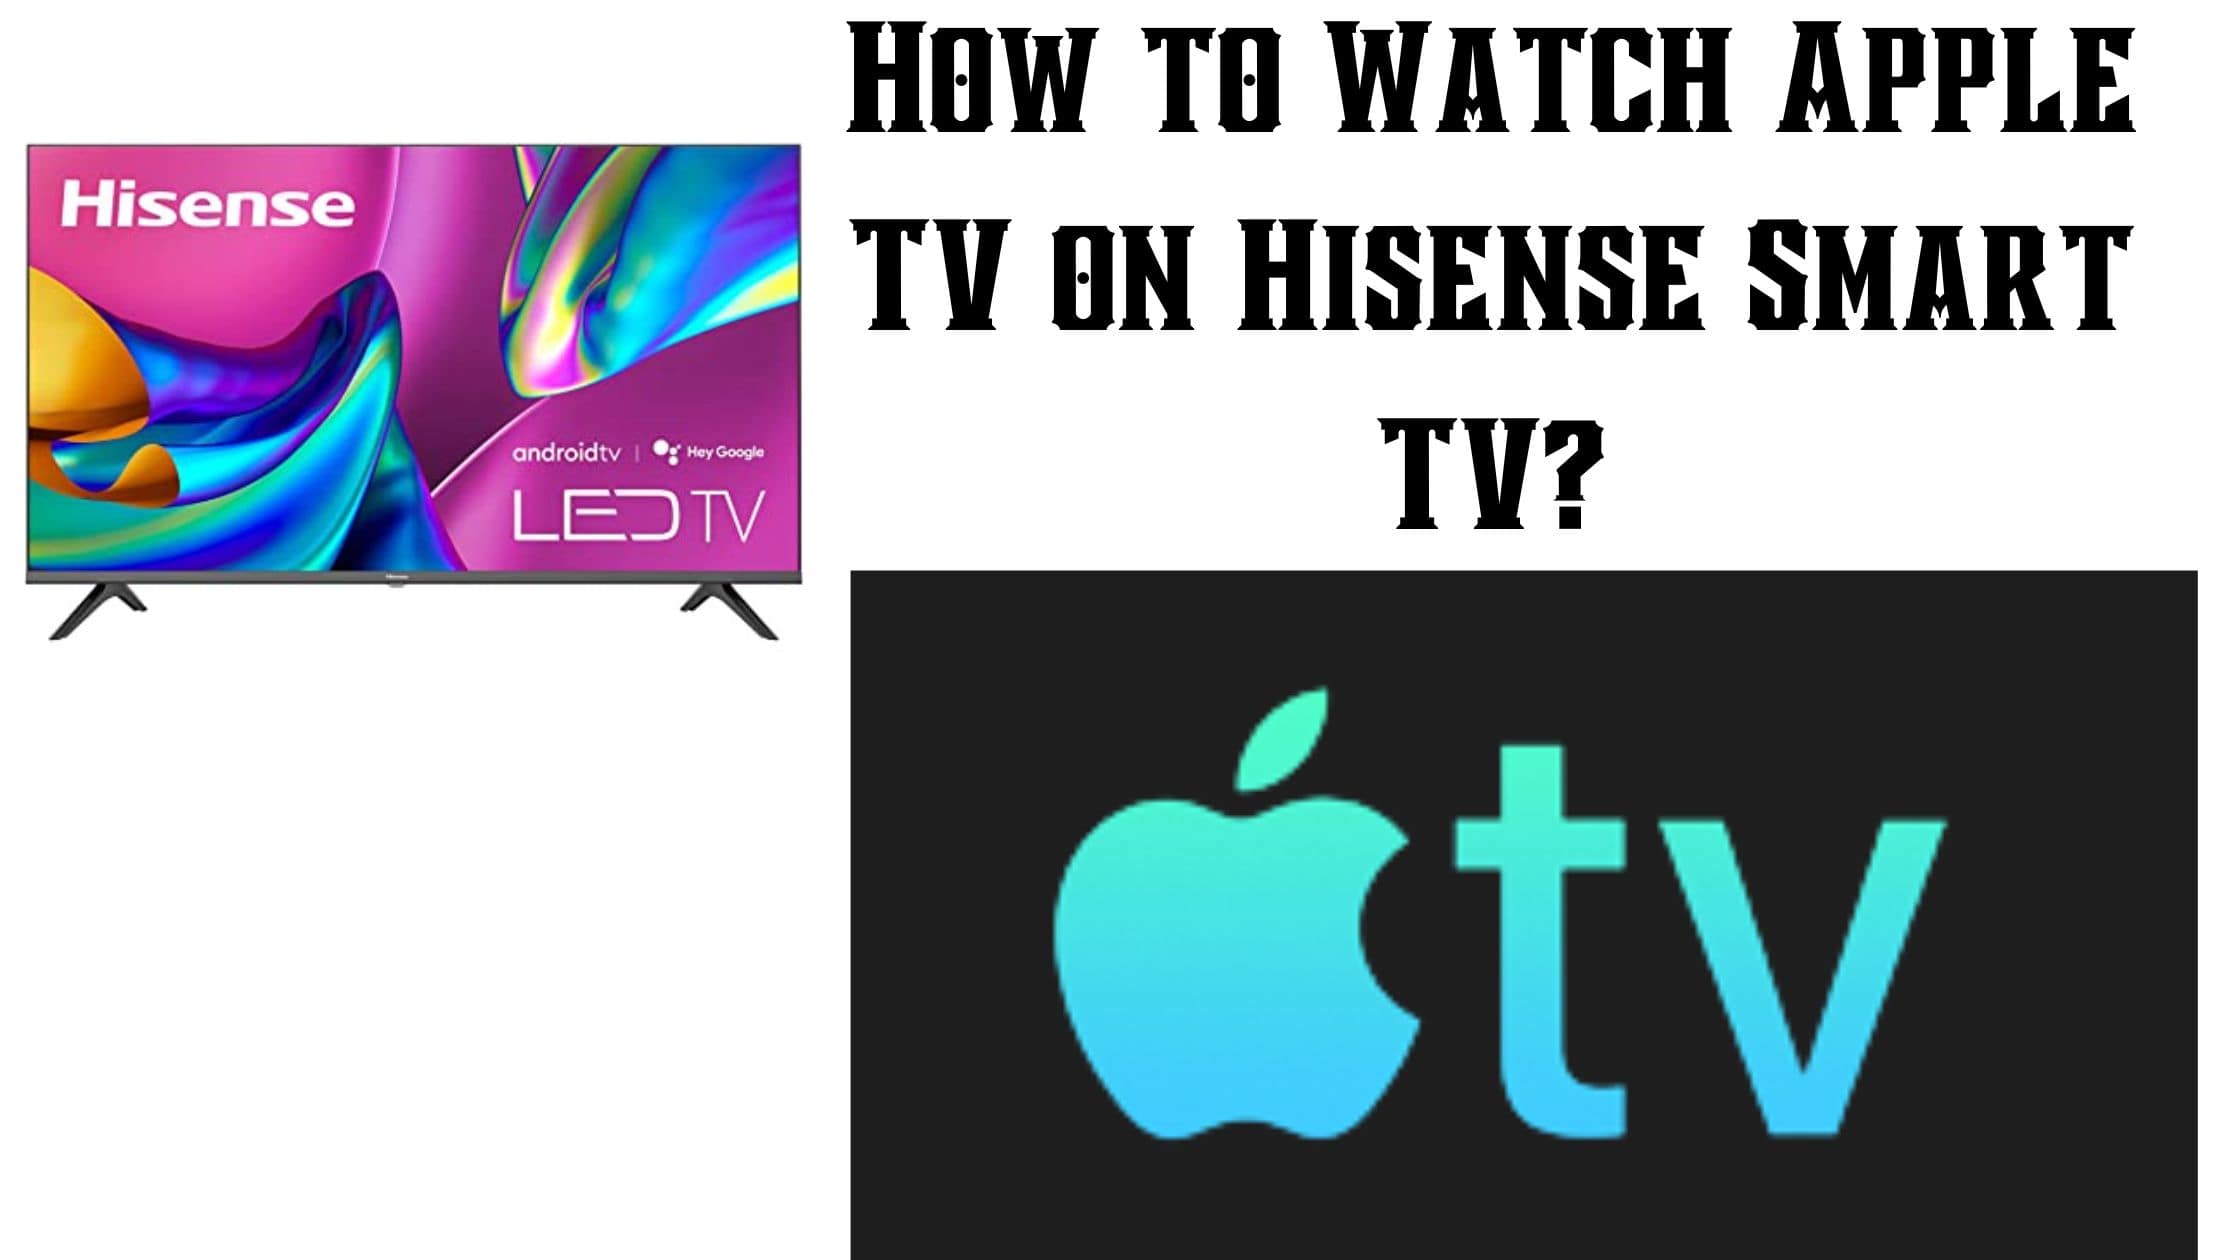 How to Watch Apple TV on Hisense Smart TV